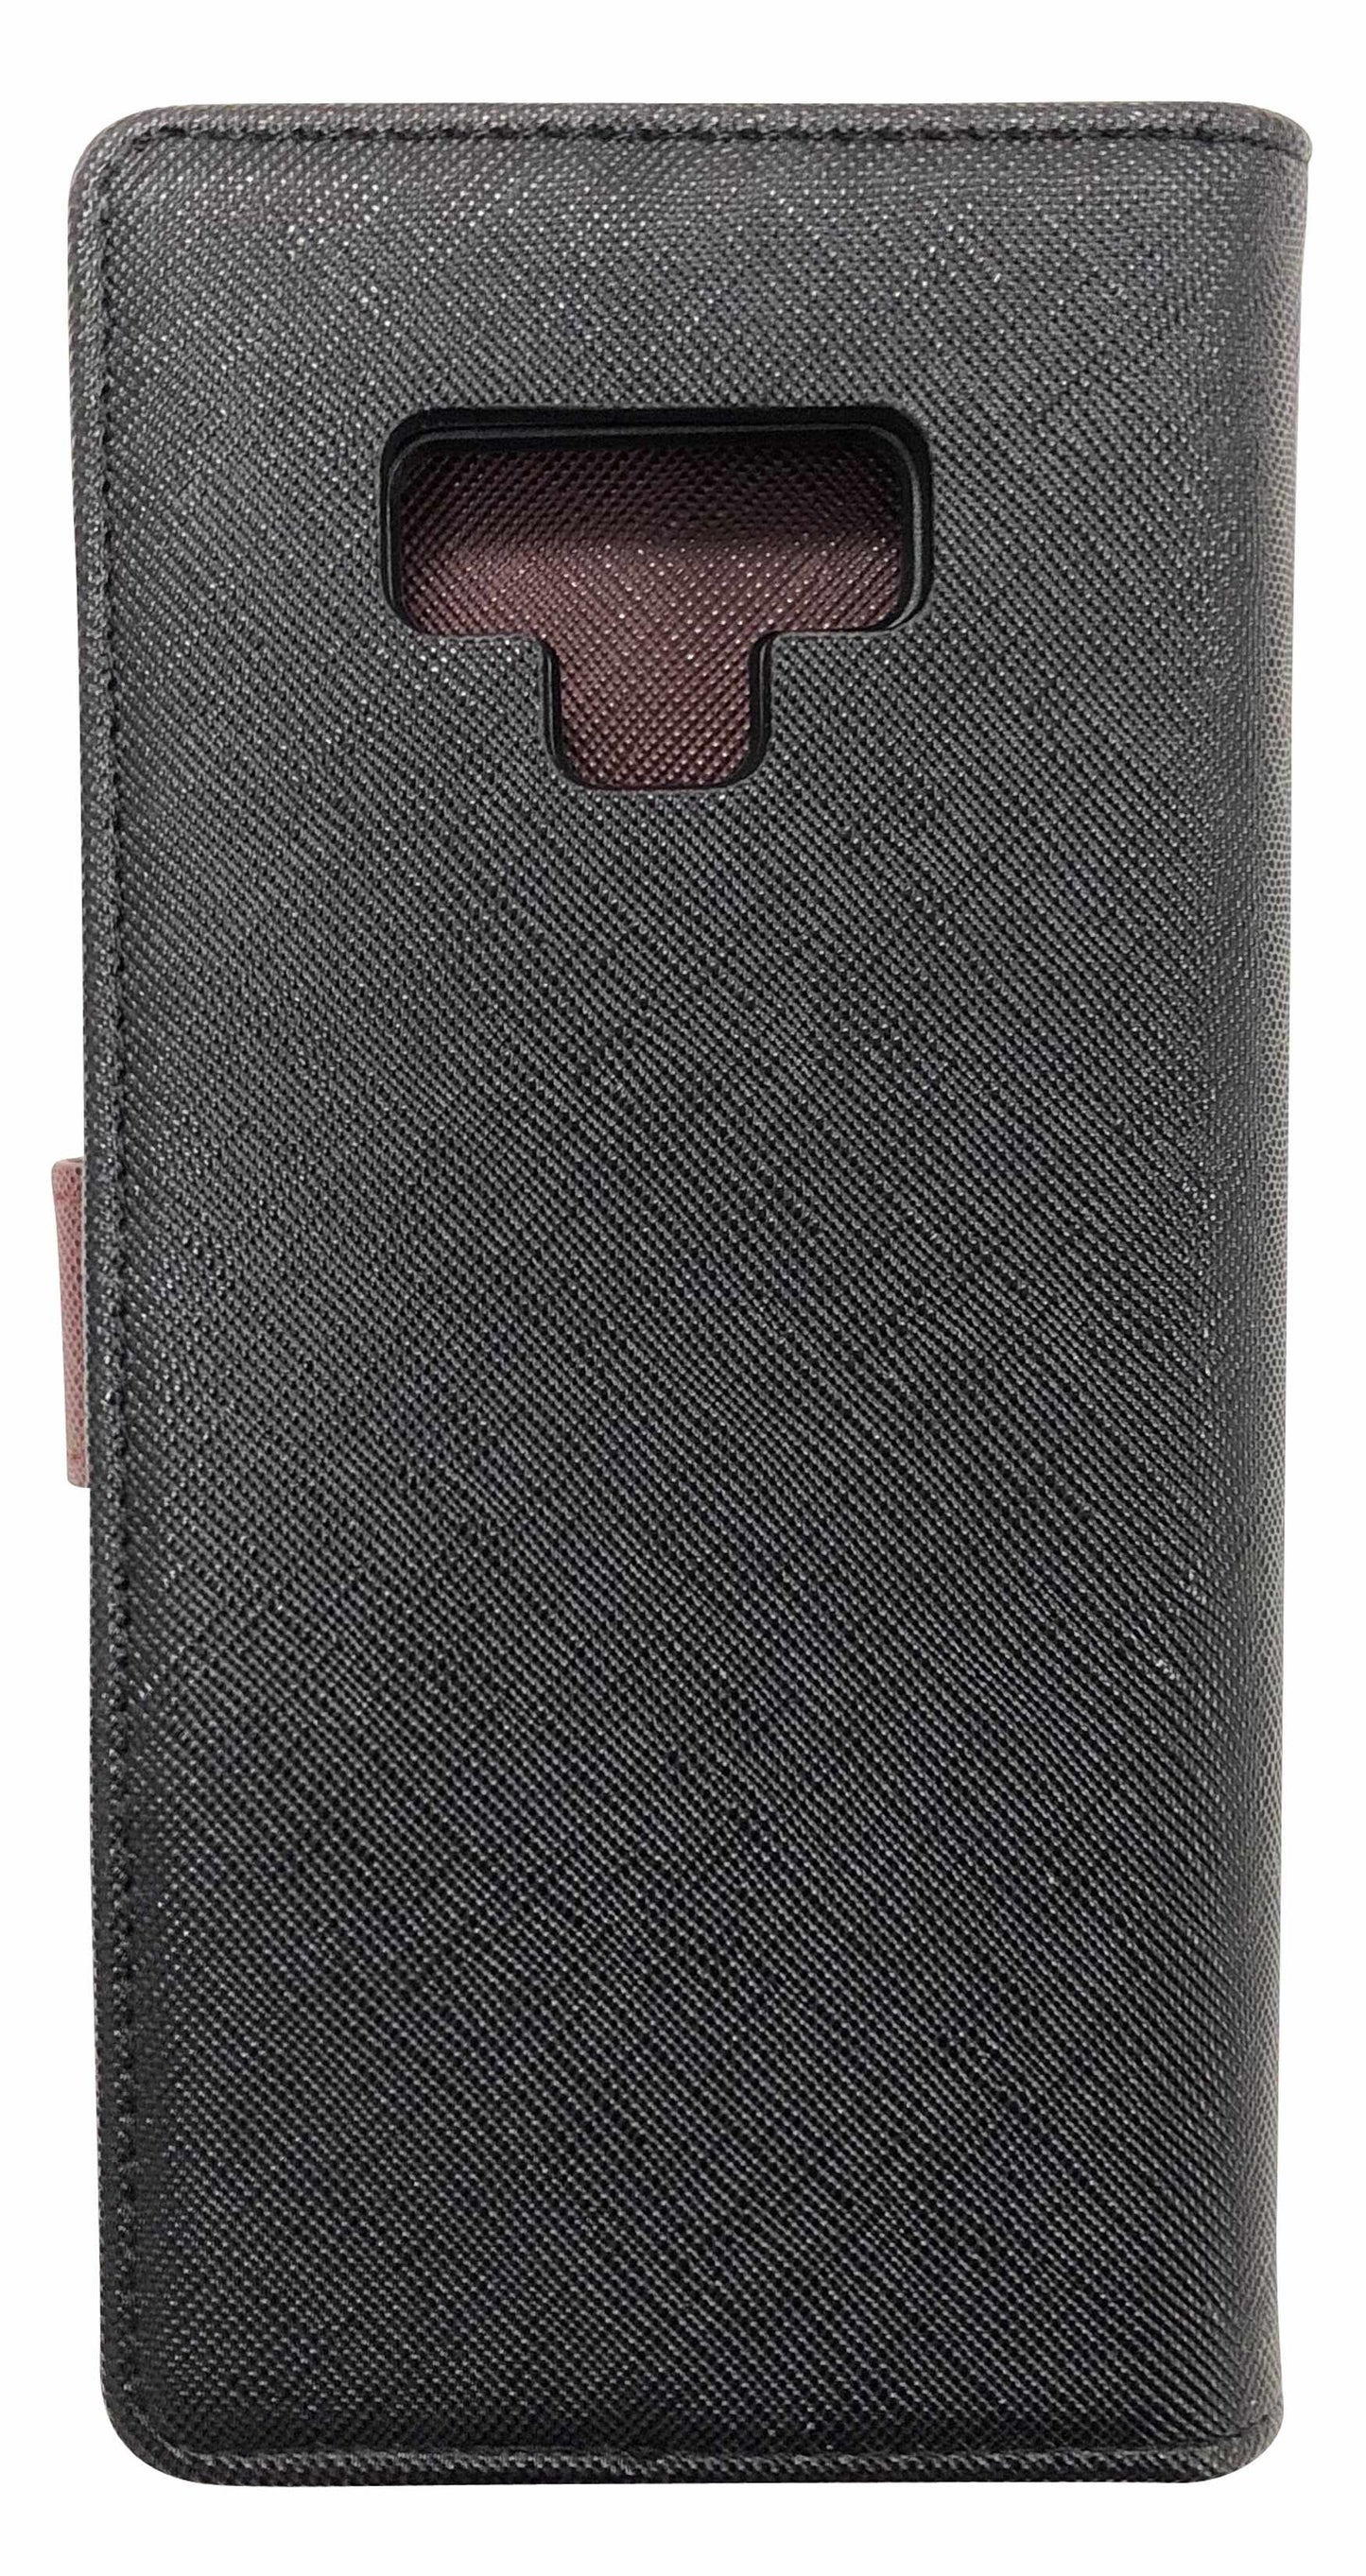 2 in 1 Folio Case Black/Brown for Samsung Galaxy Note9